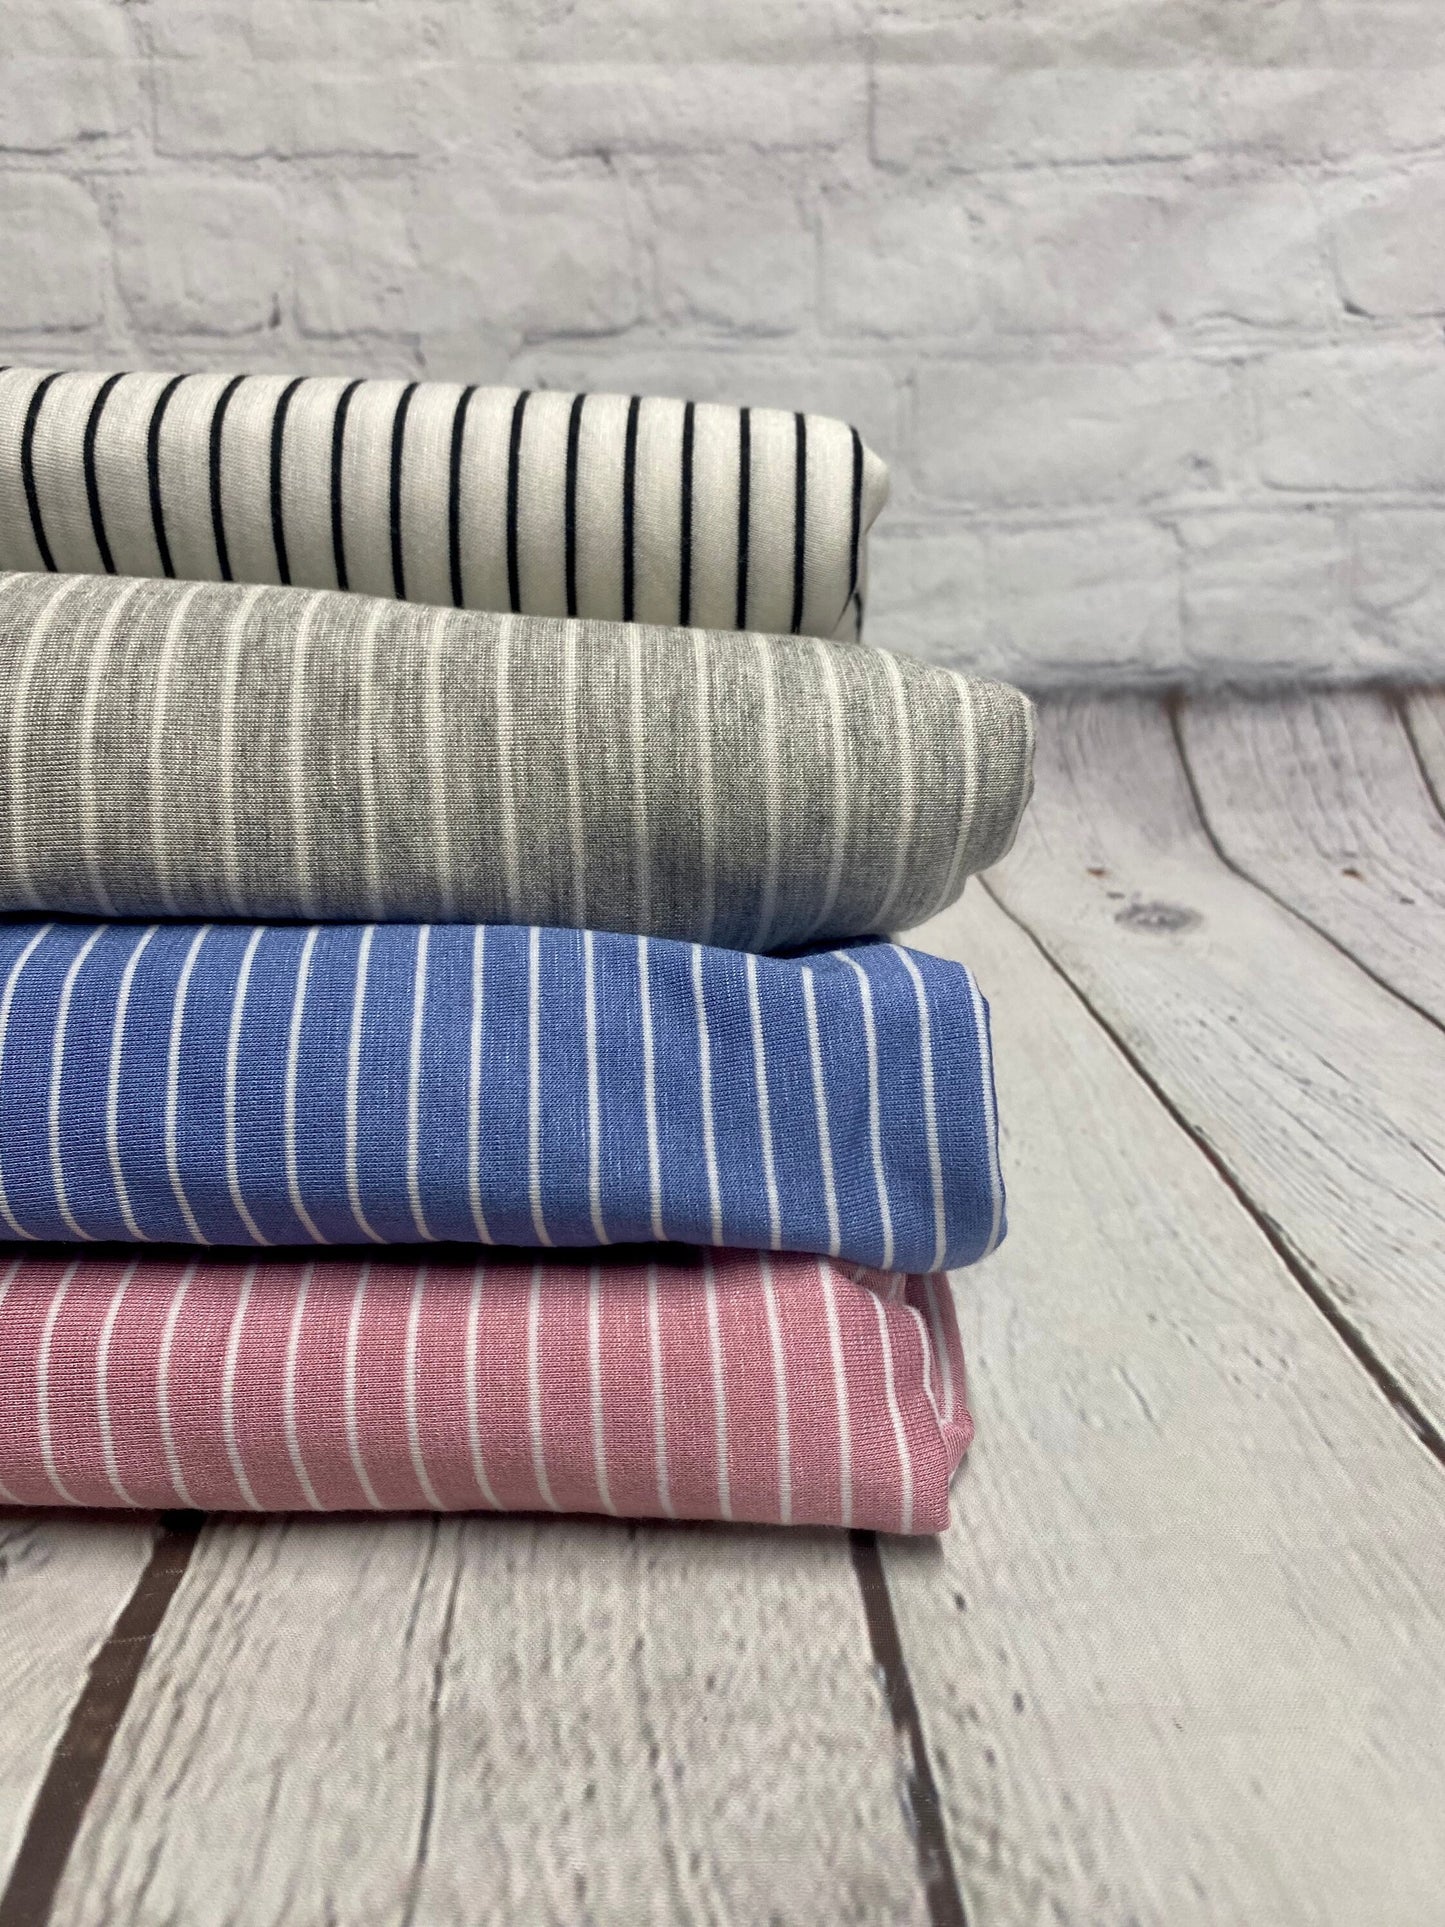 Rayon Spandex Jersey Knit Thin Stripe Fabric By The Yard